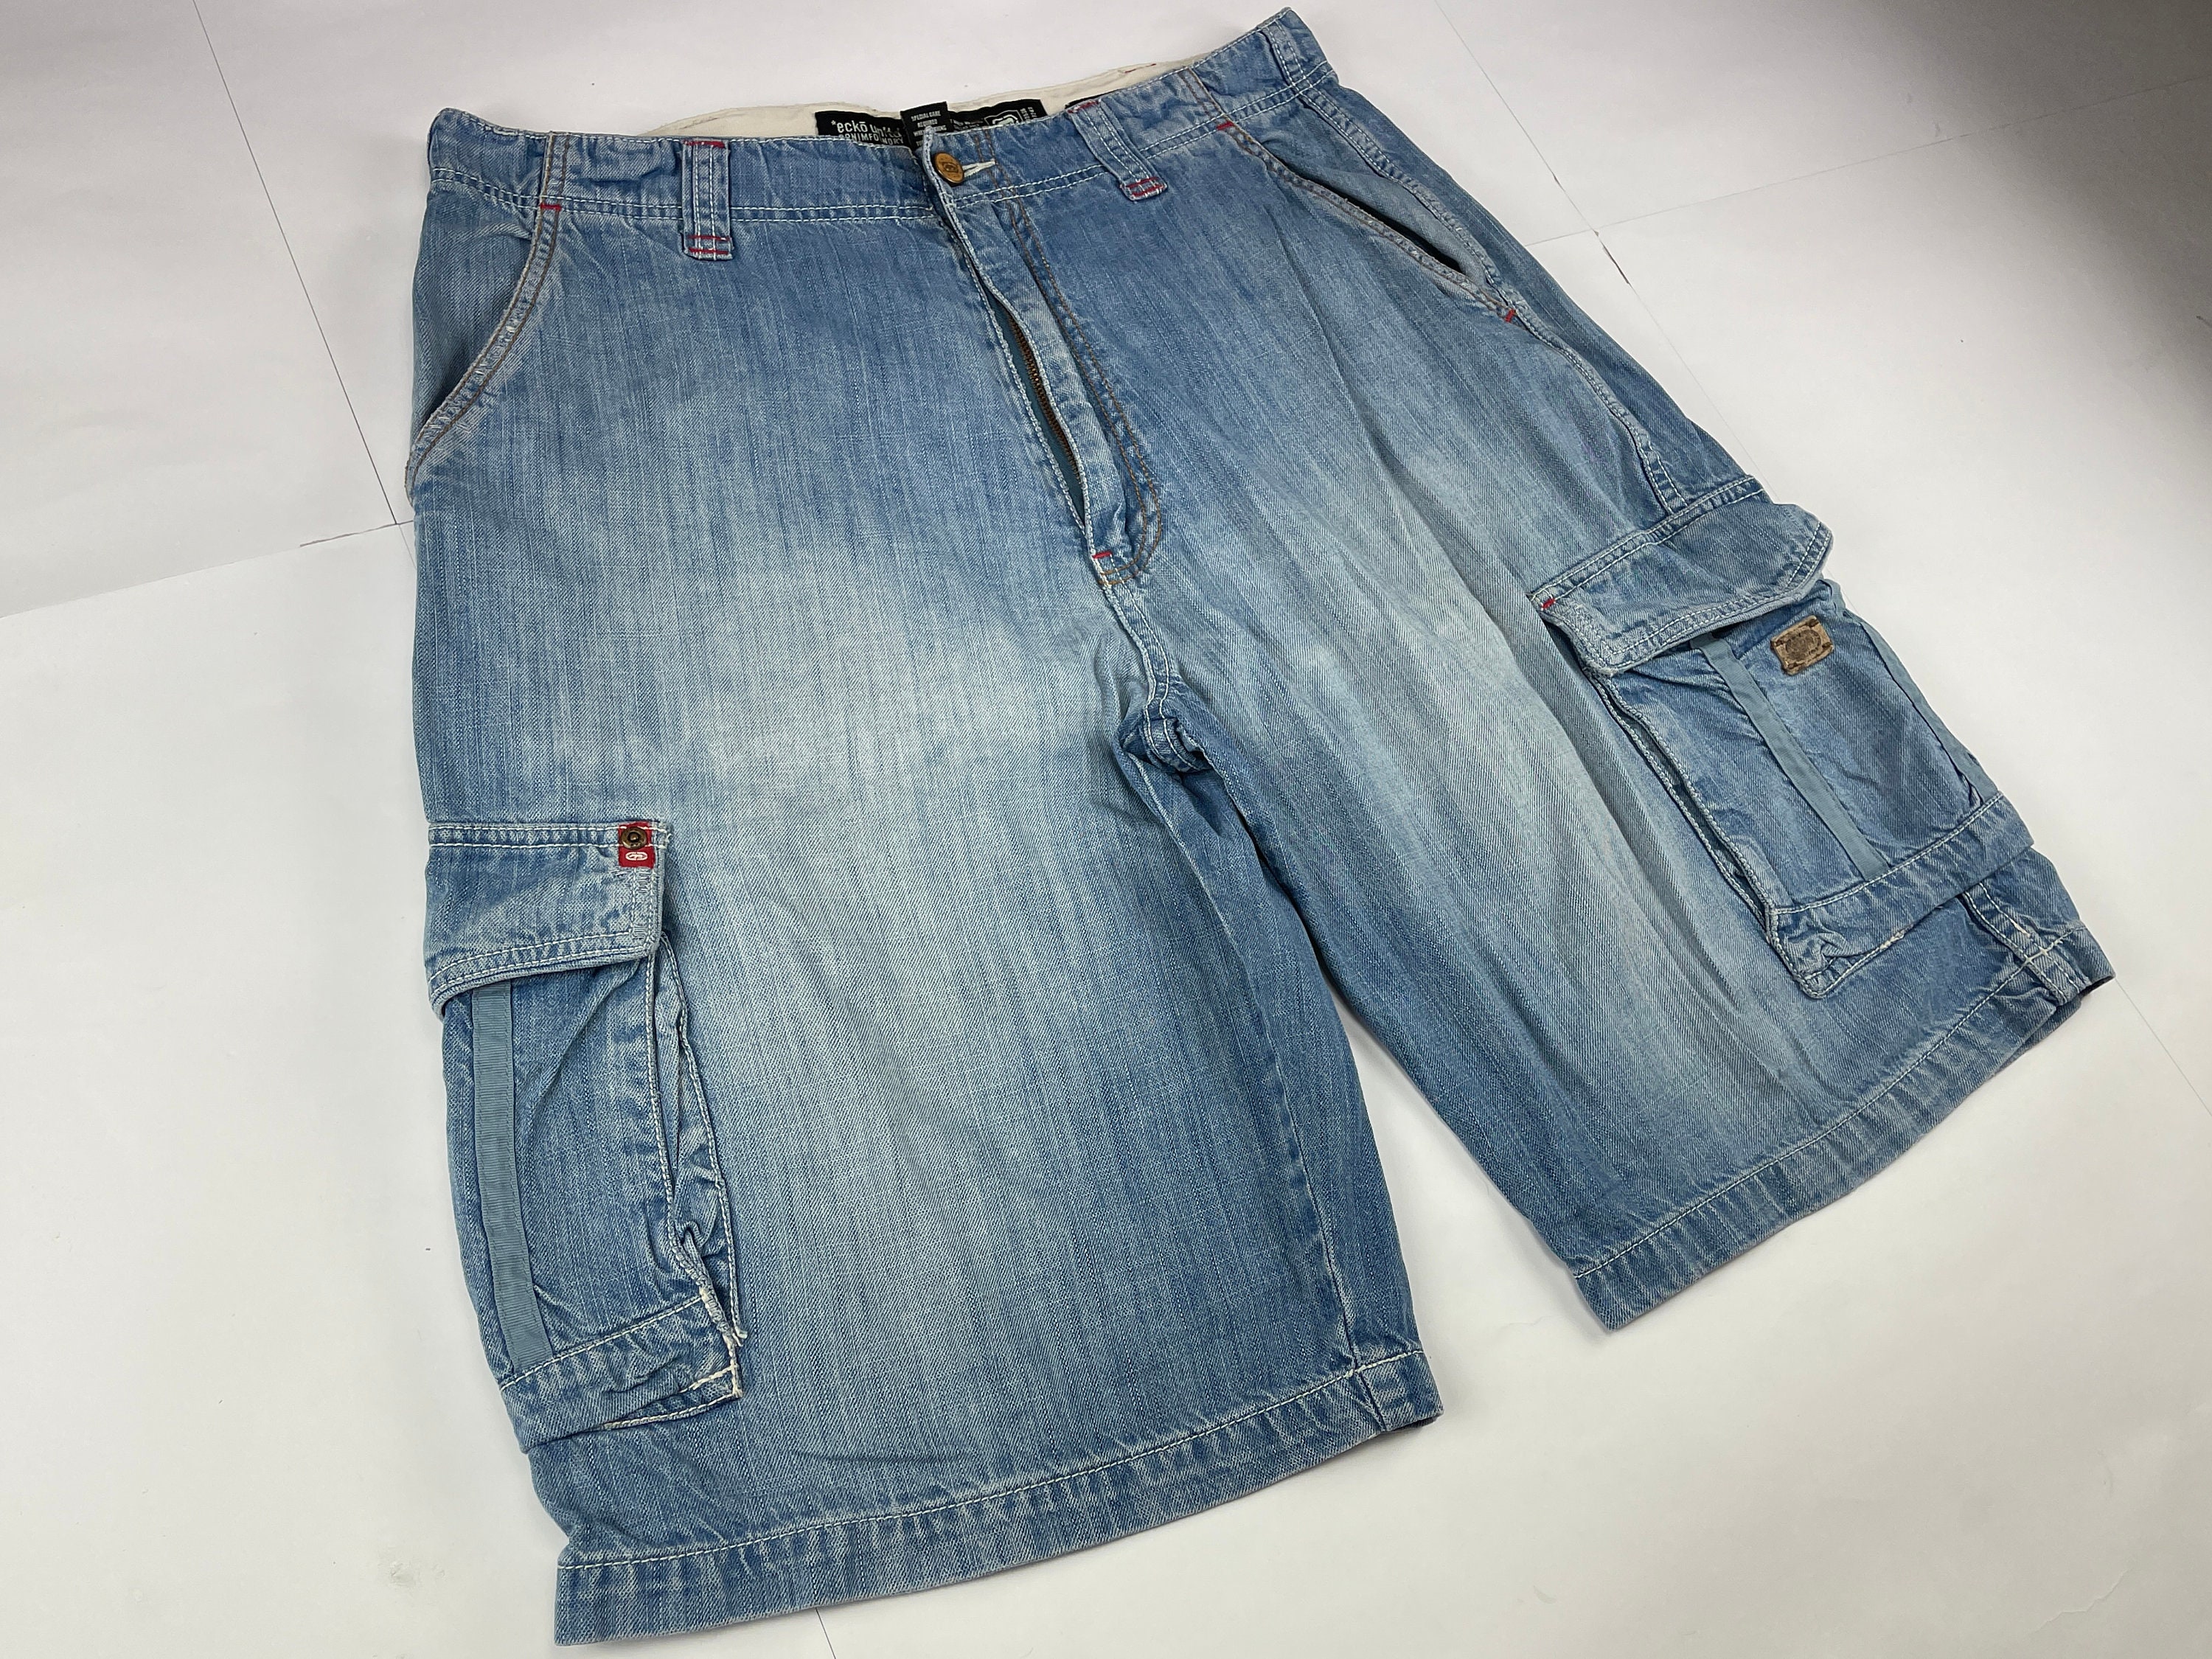 Ecko Unltd jeans shorts blue vintage Ecko jeans shorts 90s | Etsy